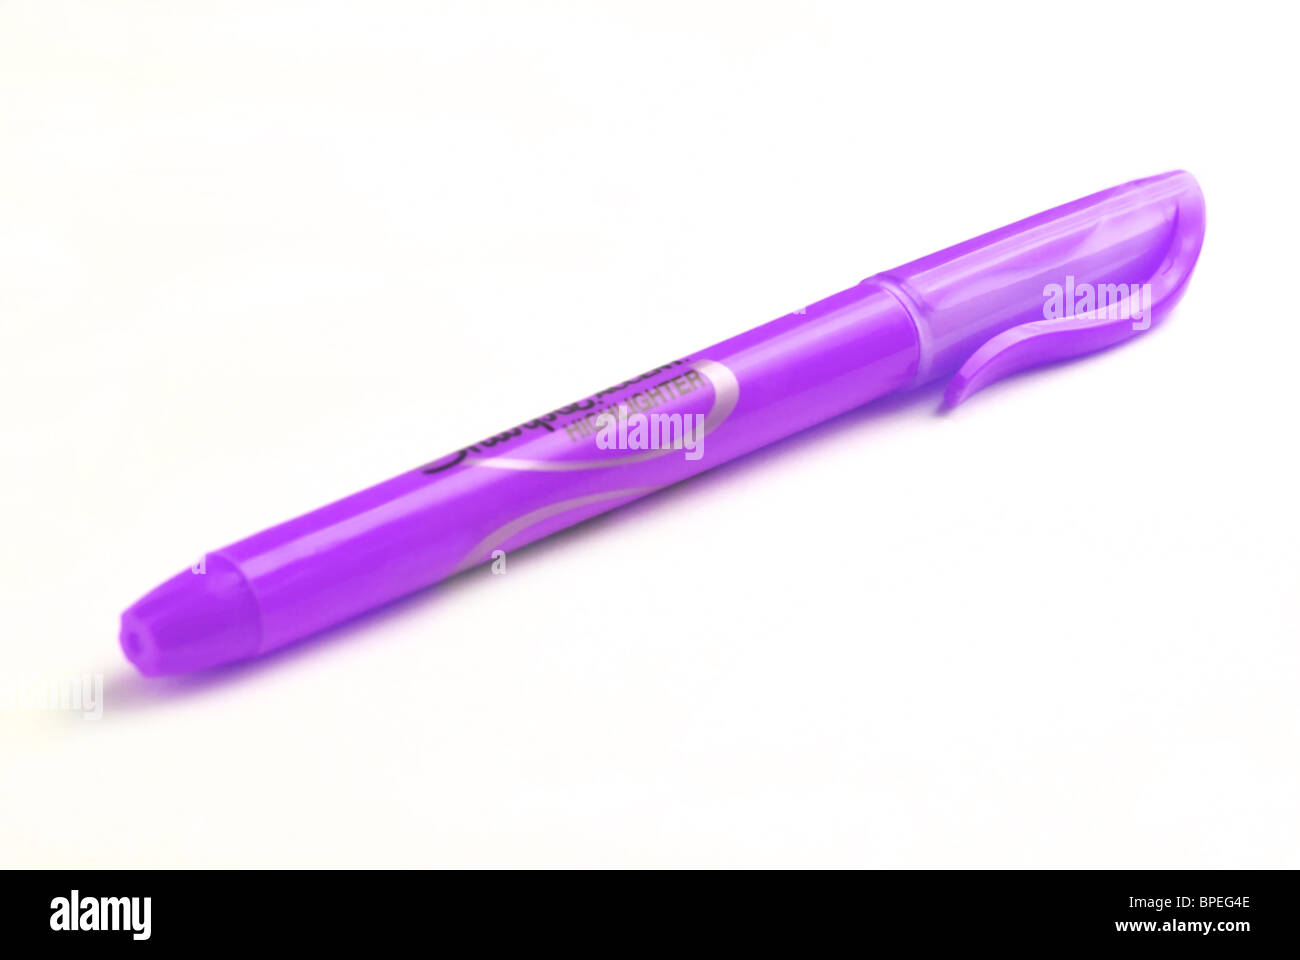 4pcs/set Fluorescent Highlighter Pen, Neon Colors, Highlight Important  Points, Doodle, Student Study Fluorescent Pen, Large Capacity Notebook Pen,  Marker Pen